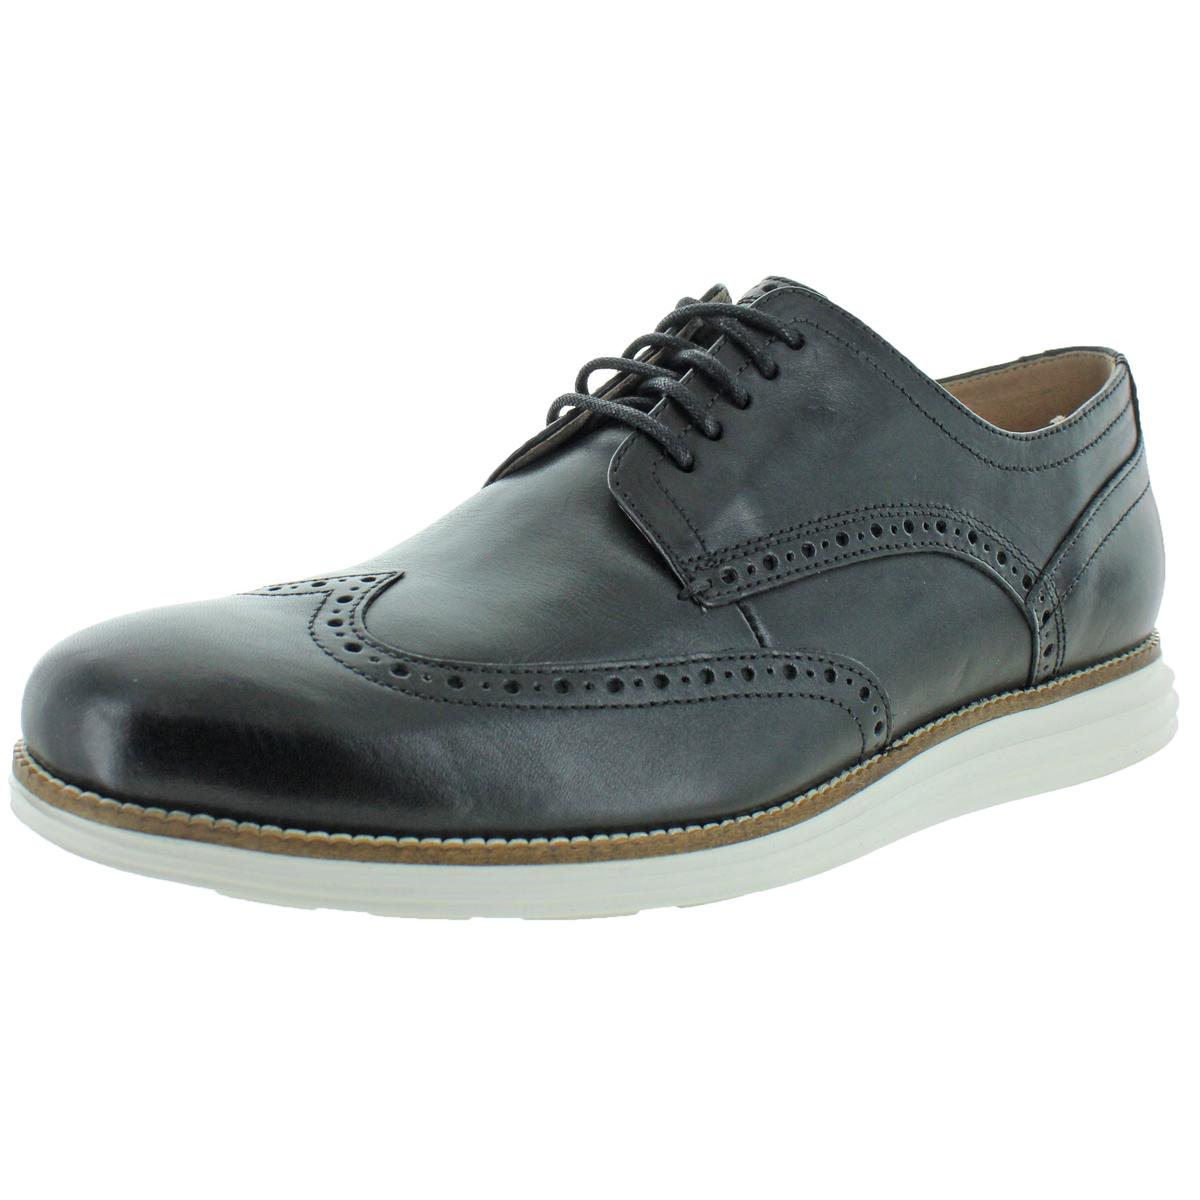 Cole Haan Mens OriginalGrand B/W Leather Oxfords Shoes 11 Medium (D